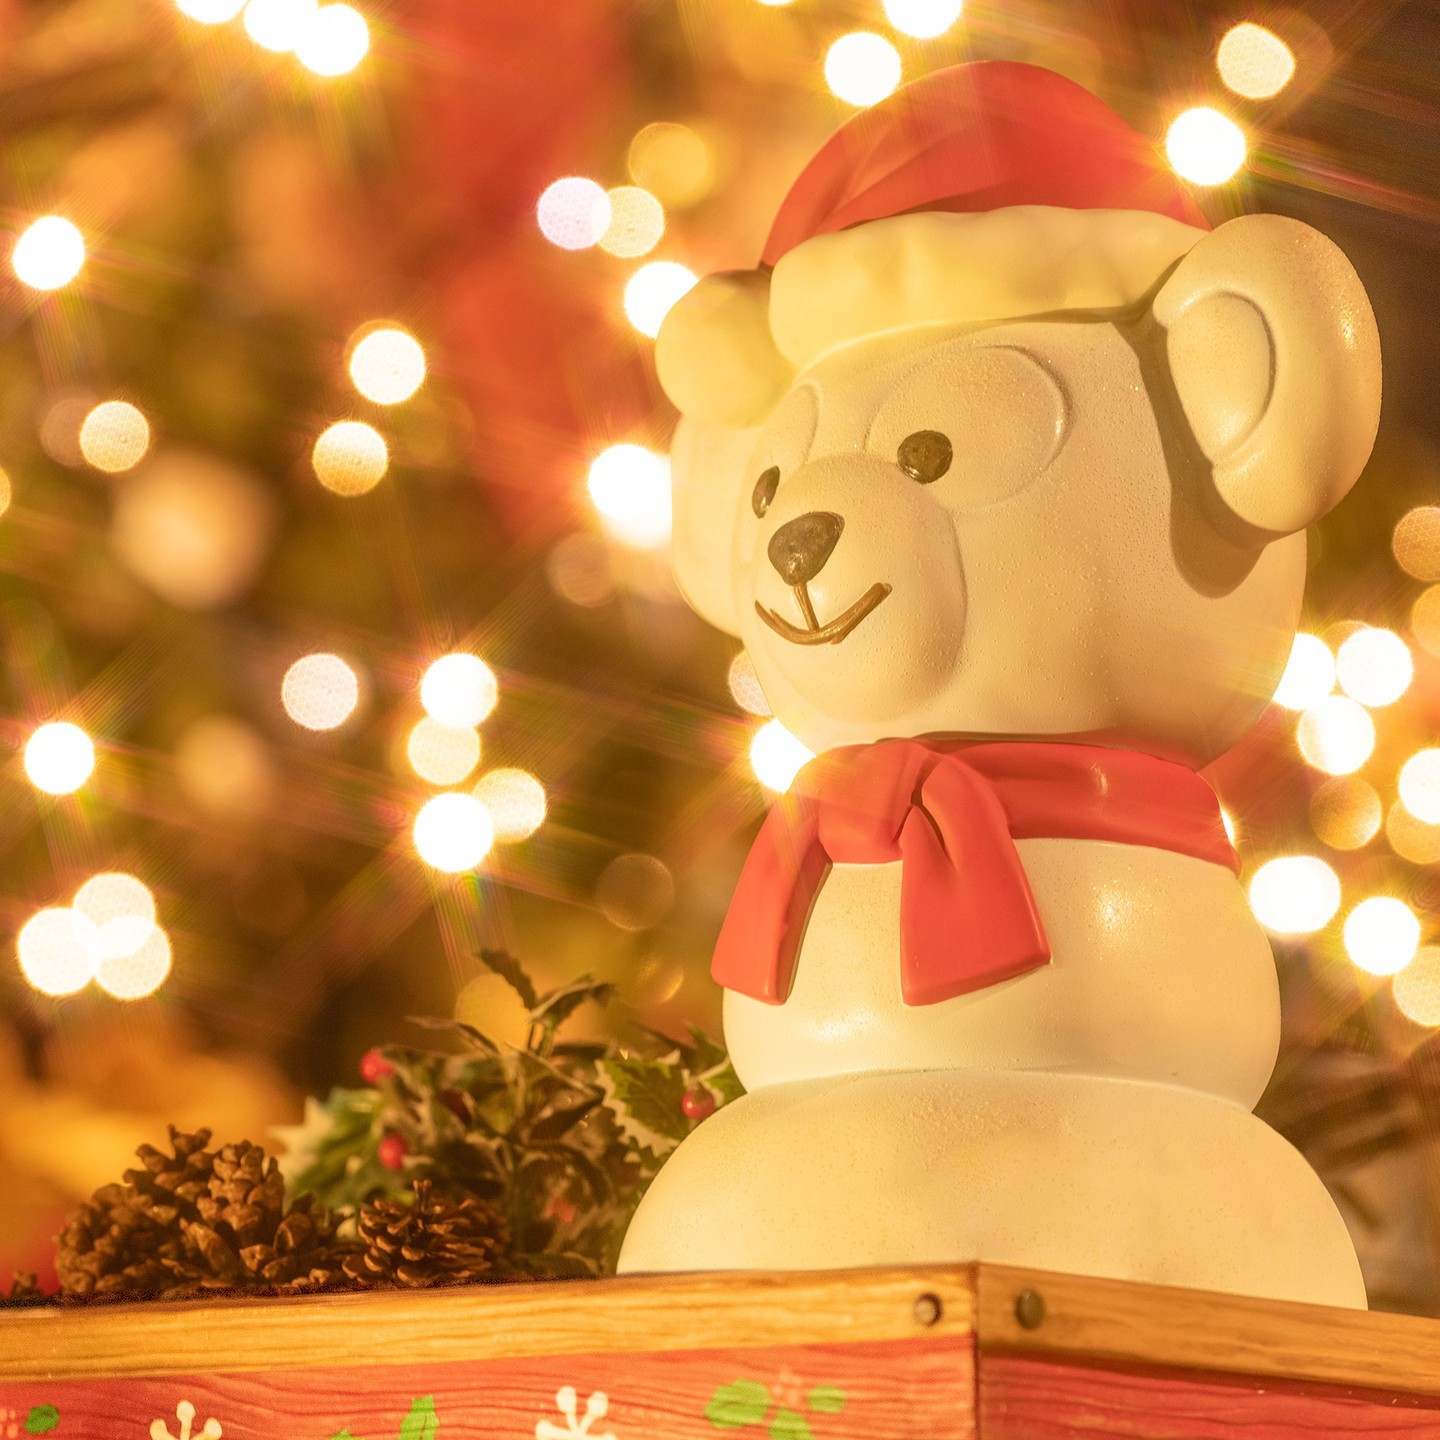 Happy holidays!
素敵なクリスマスを・・・☆
#christmas #duffy #tokyodisneysea #tokyodisneyresort...的图像